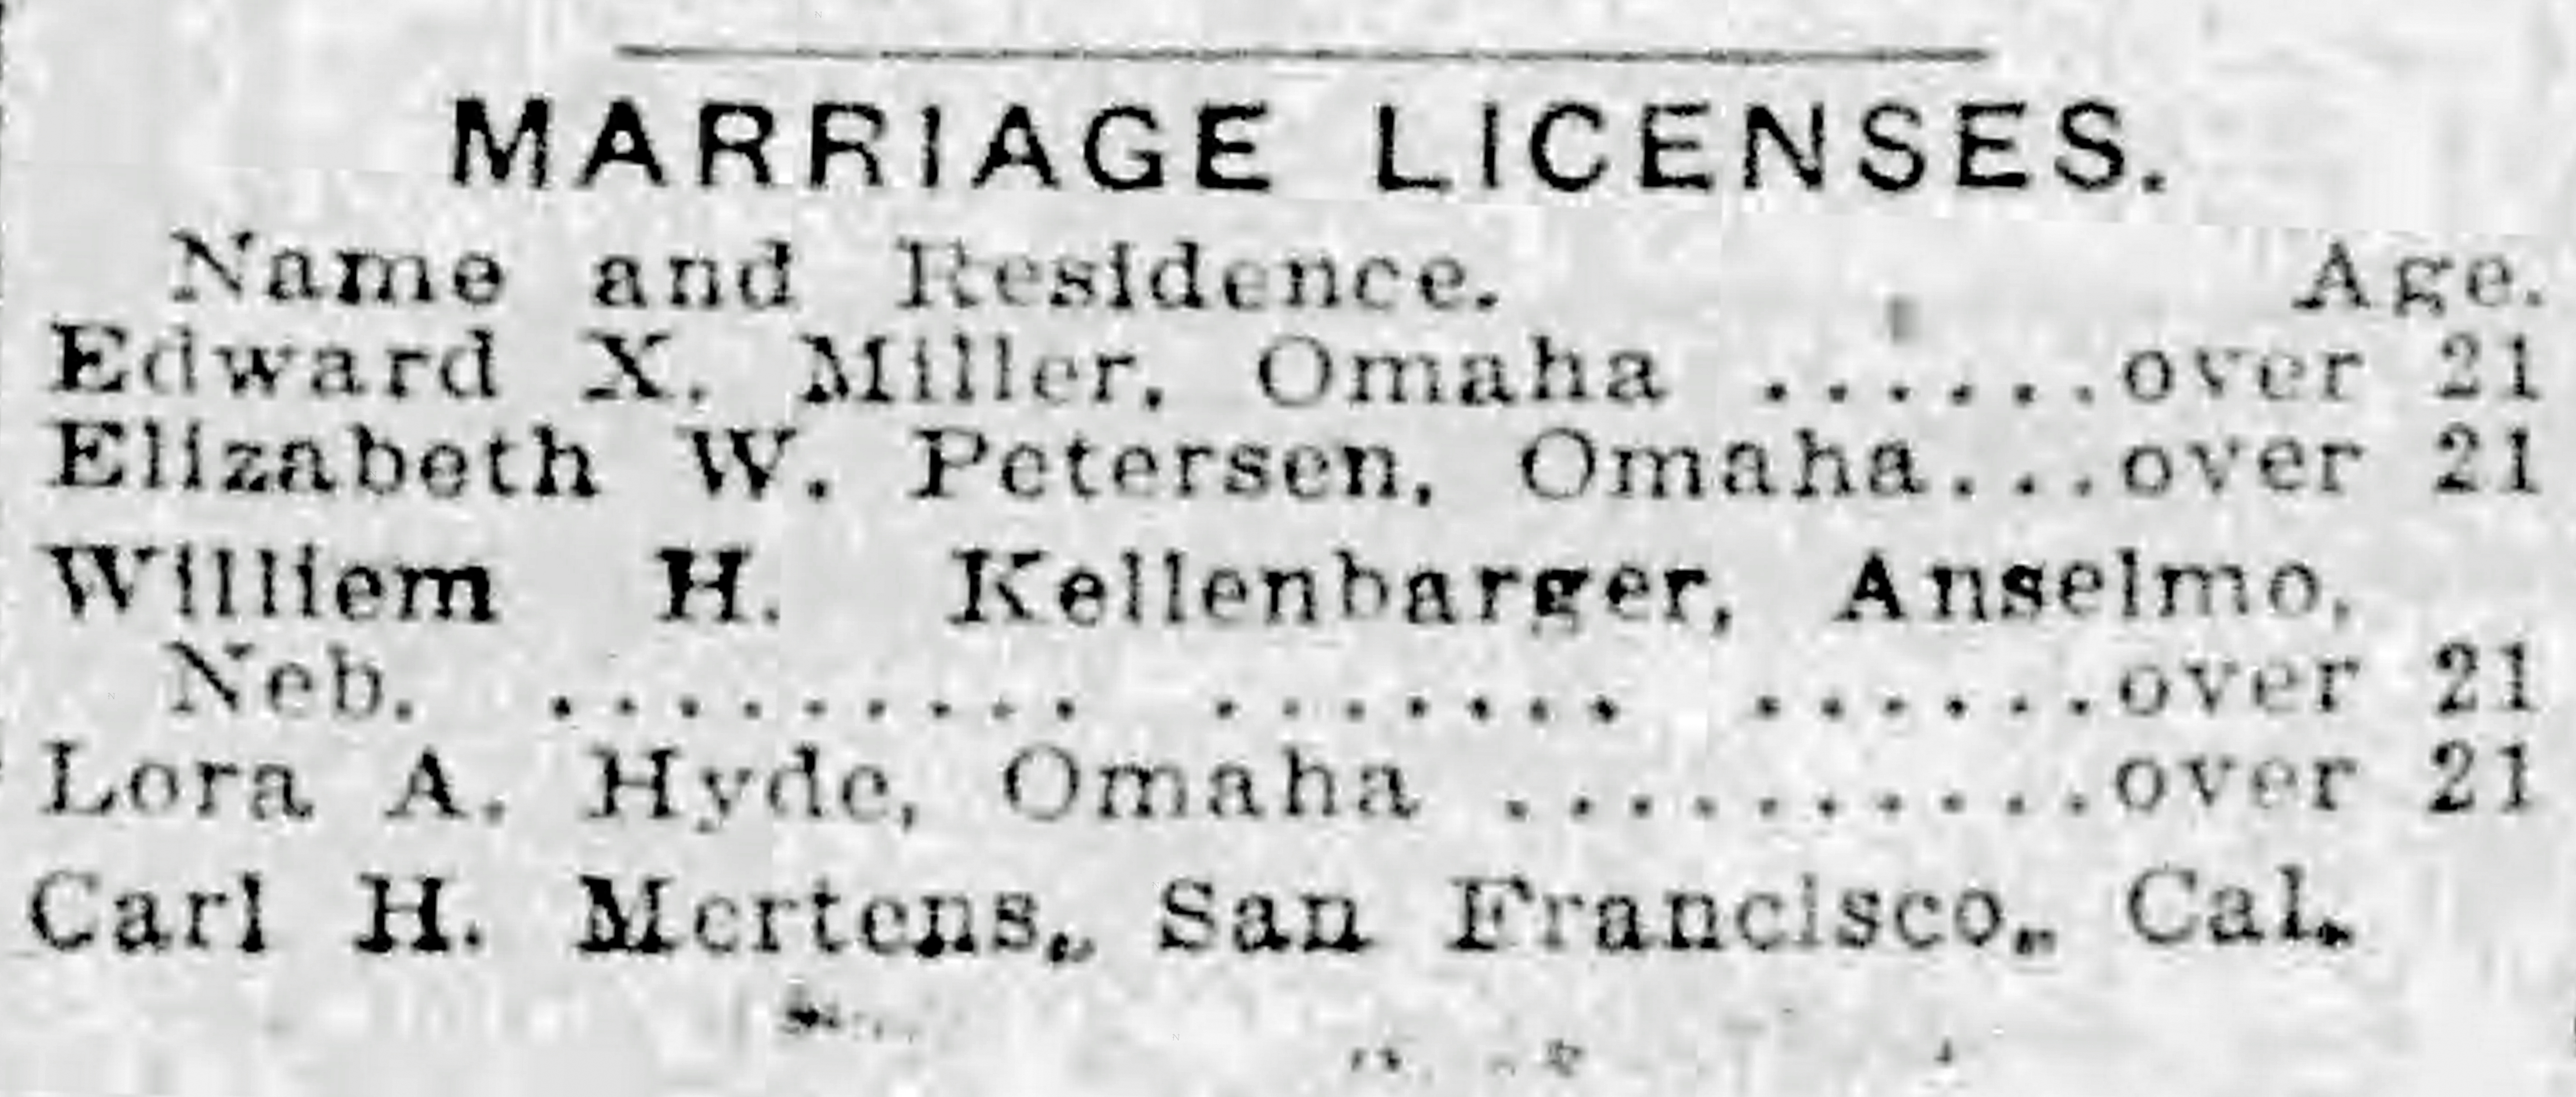 1926 marriage, Edward X. Miller and Elizabeth Petersen